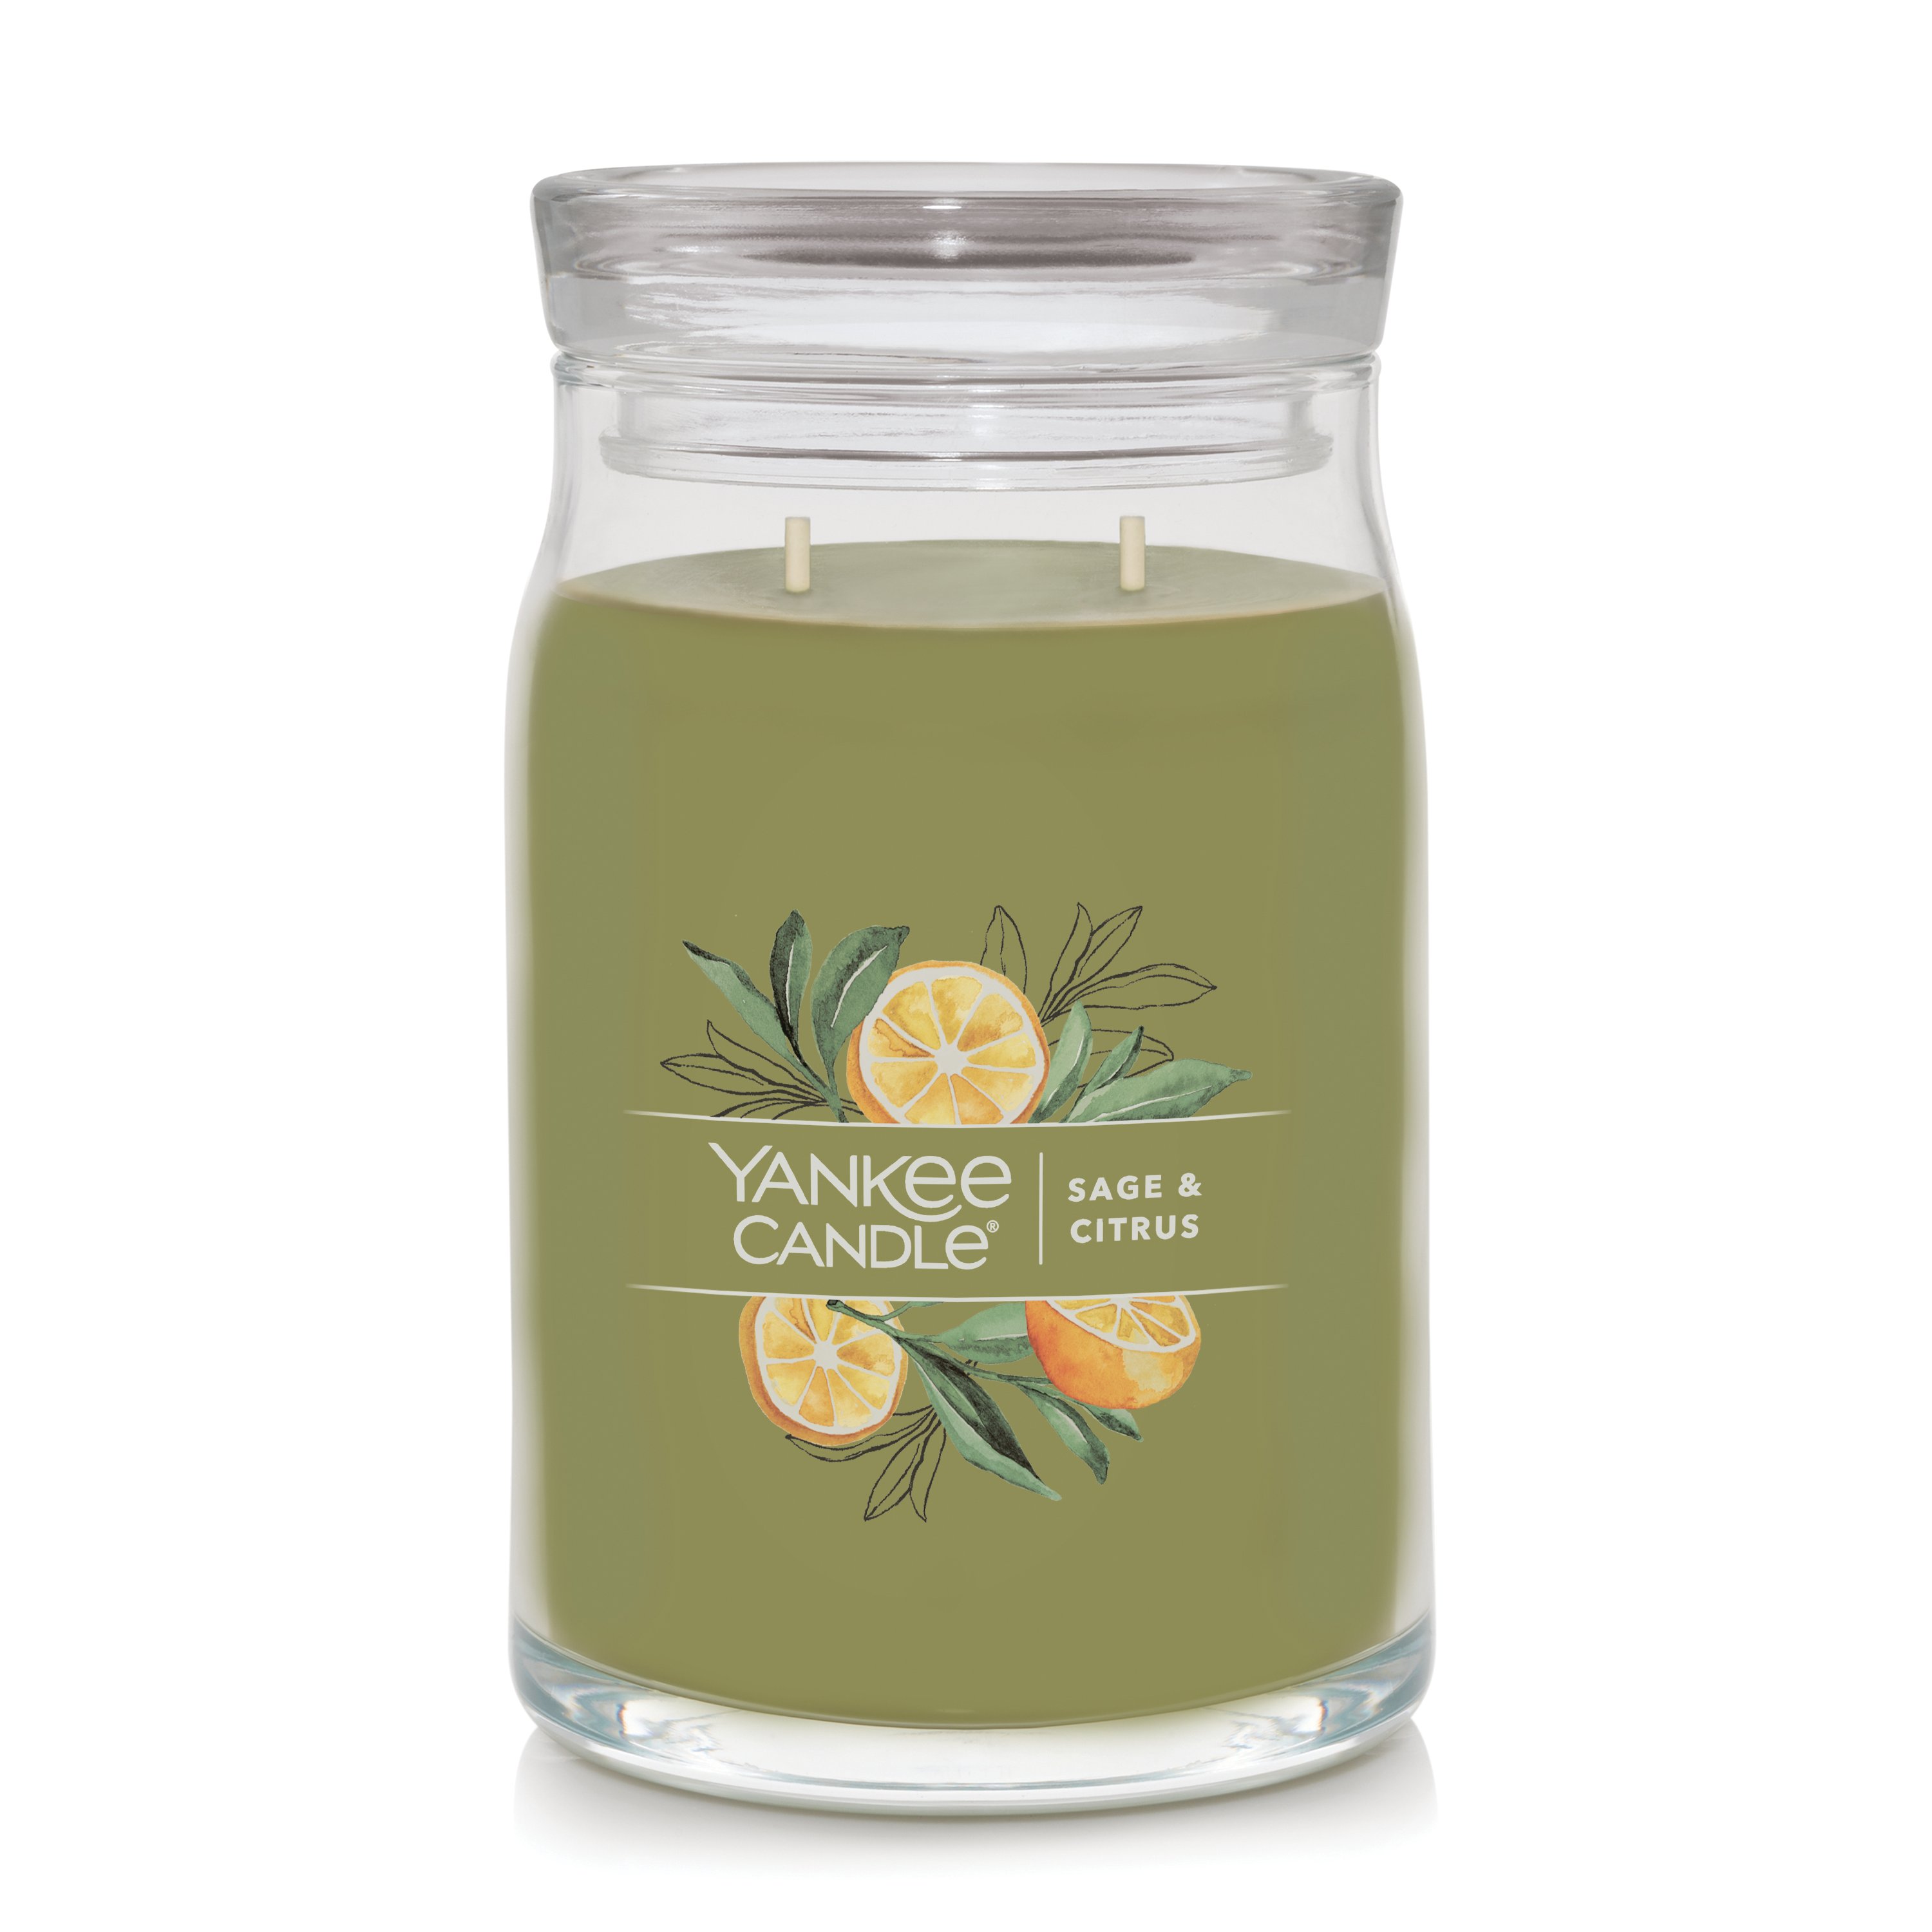 Yankee Candle Sage & Citrus Whole Home Air Freshener 0.37 oz